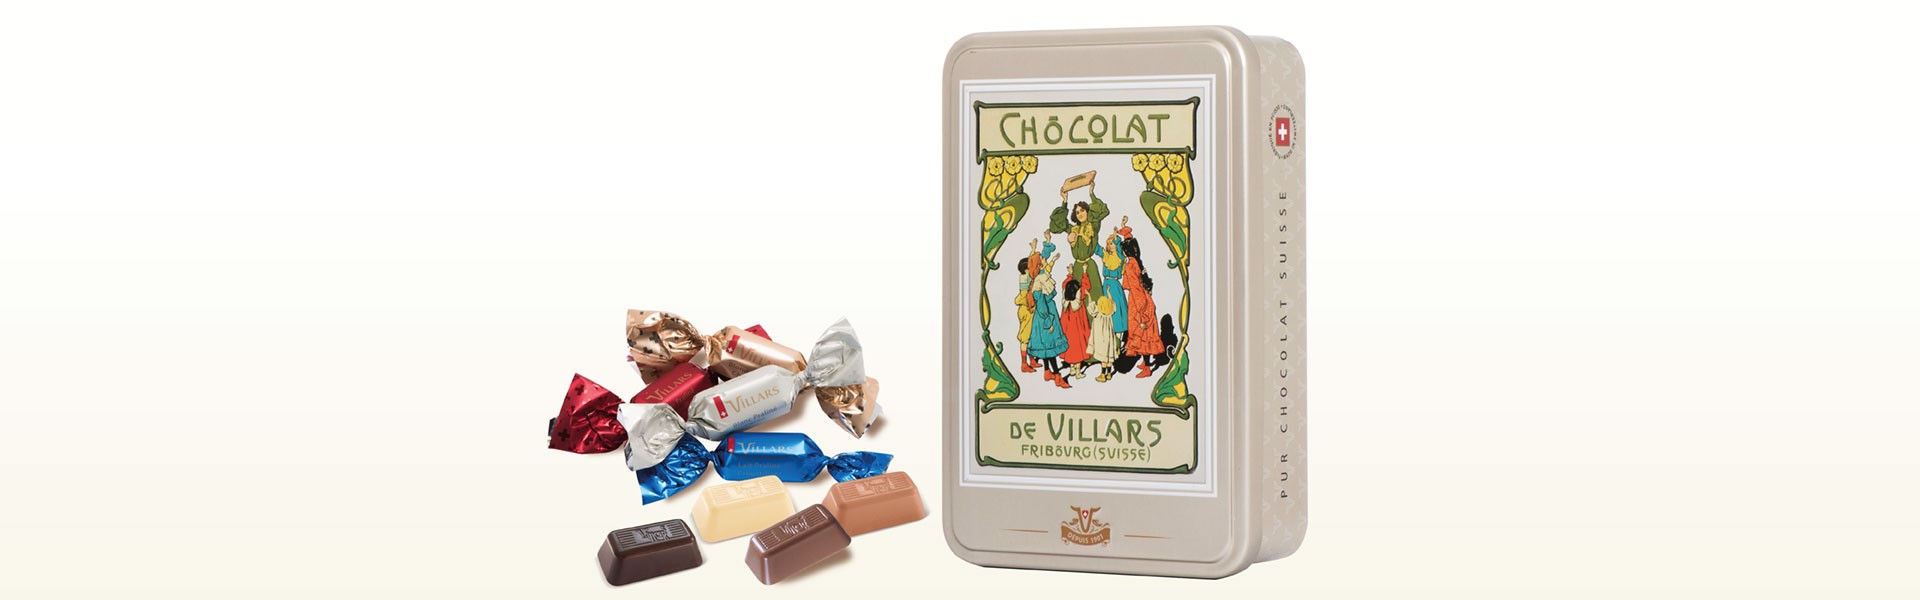 chocolat villars boite collector maitresse